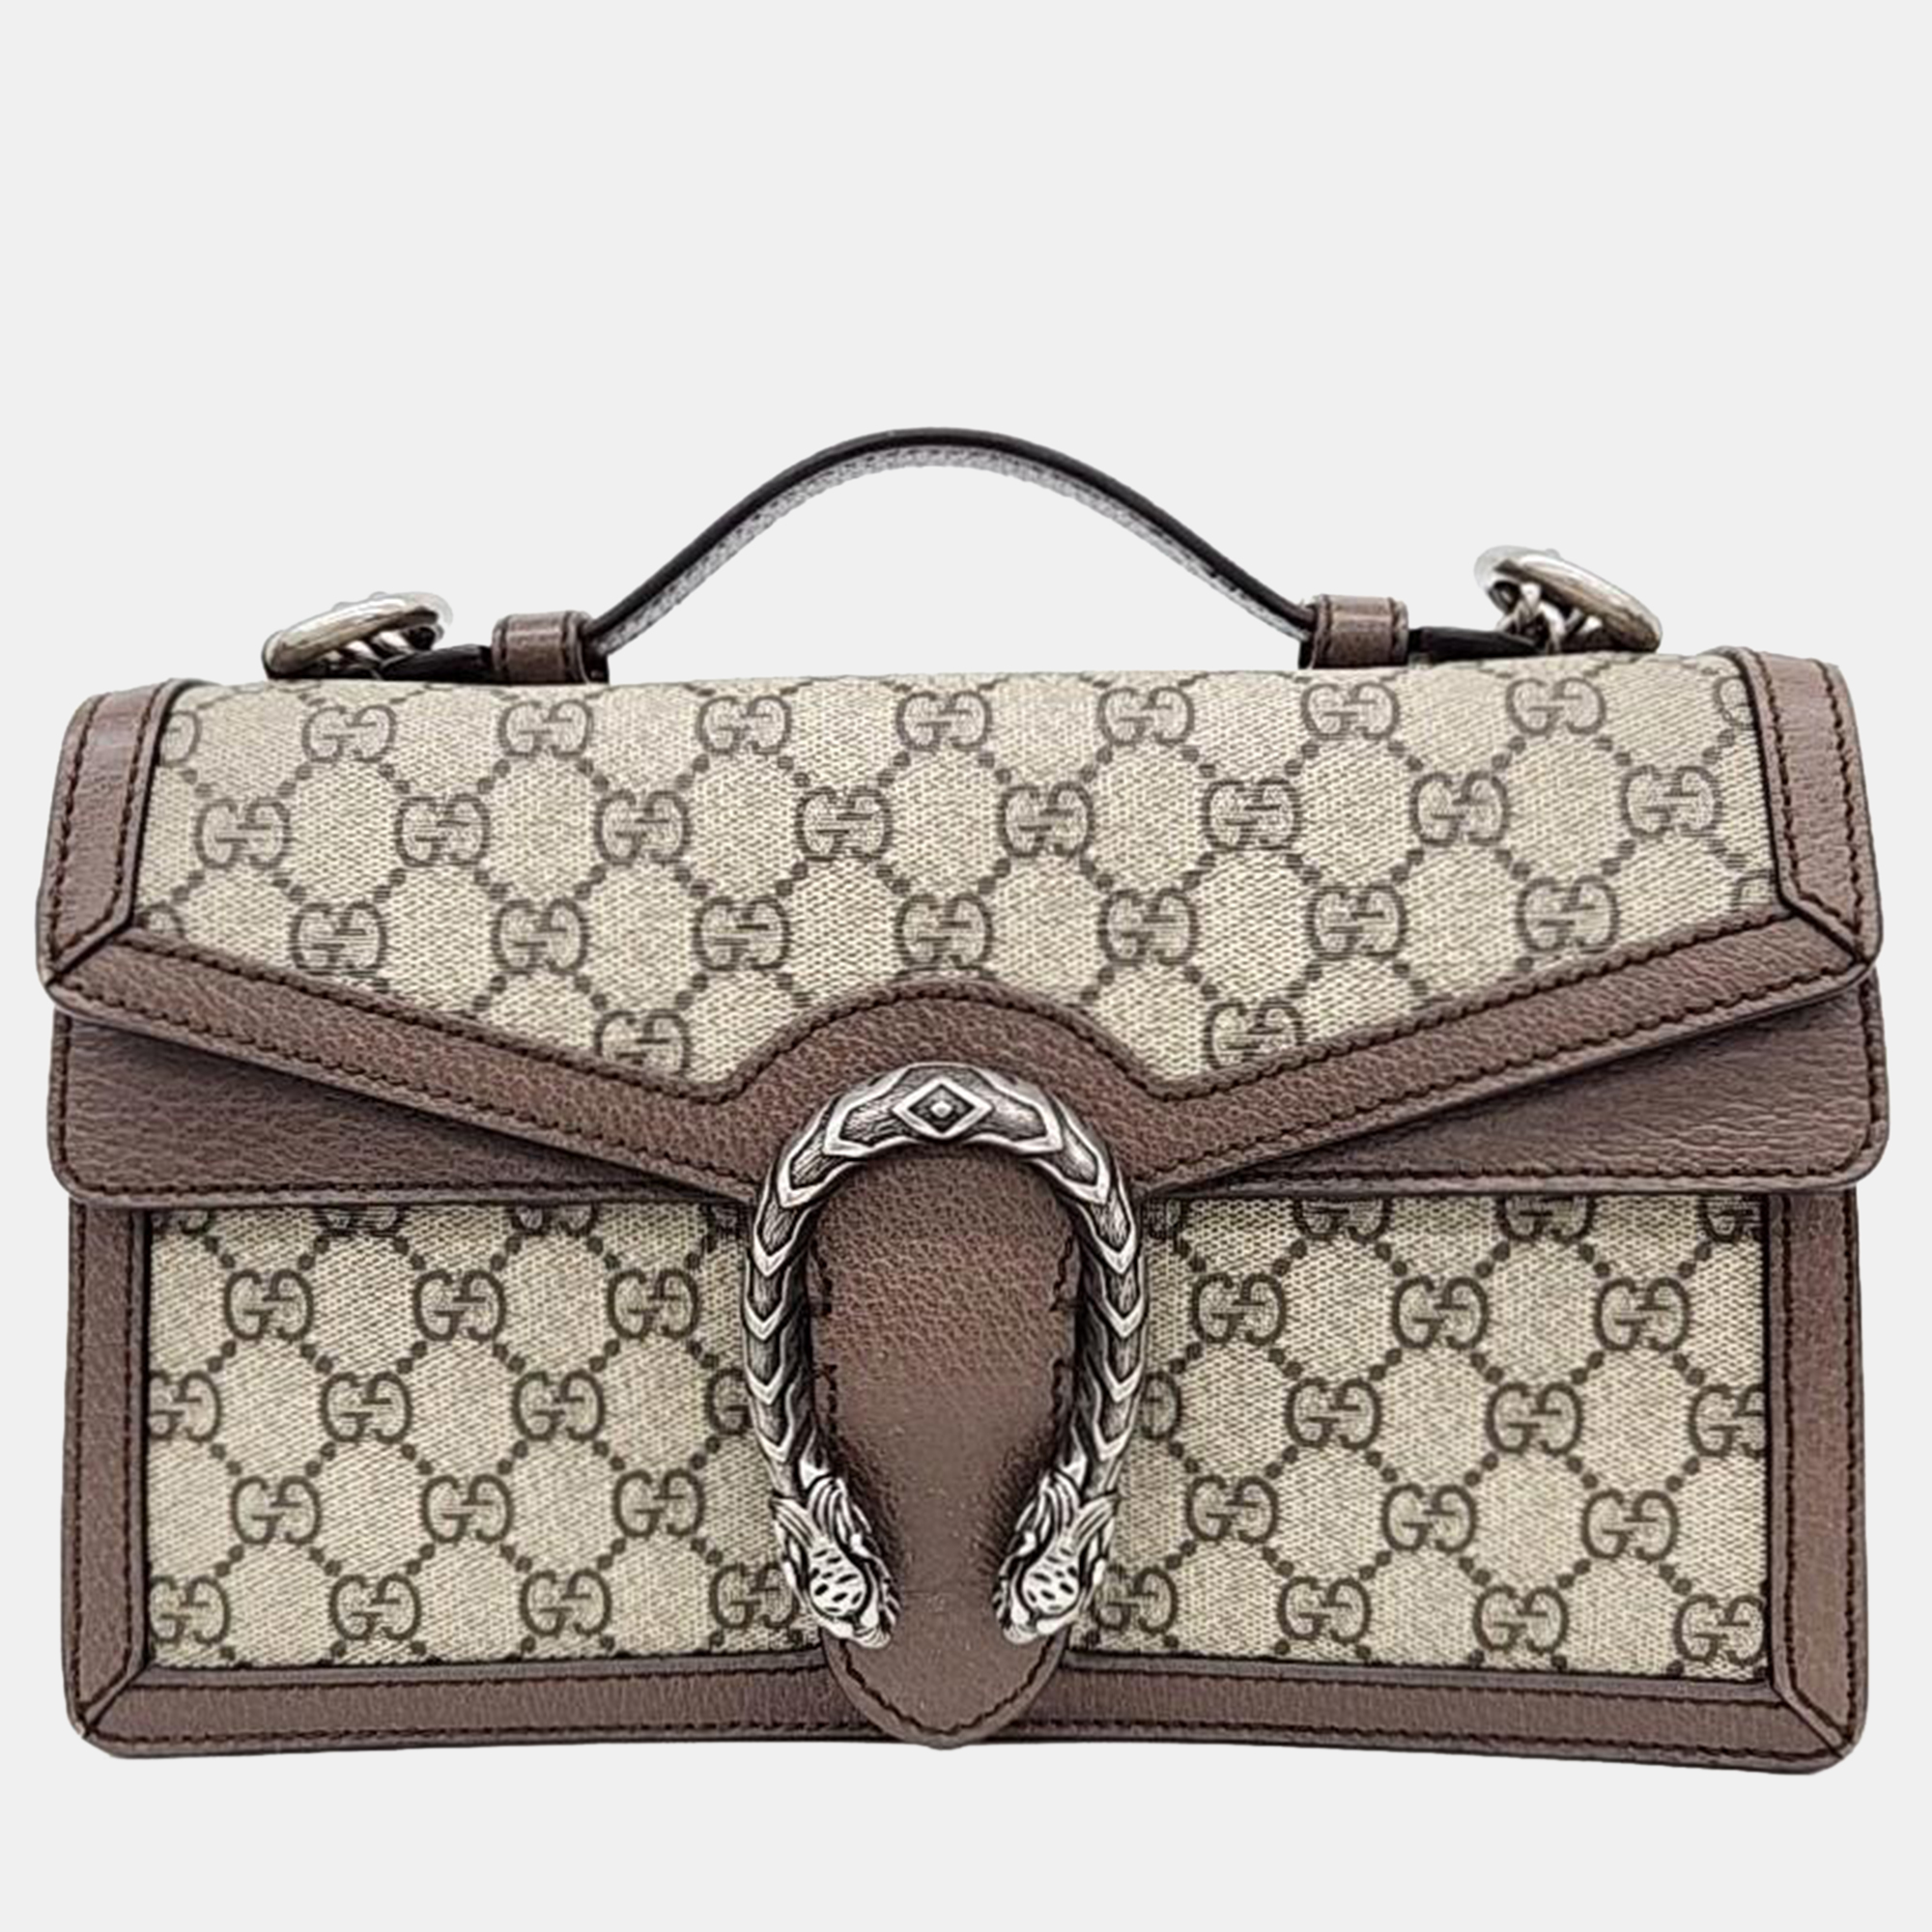 Gucci dionysus gg top handle bag